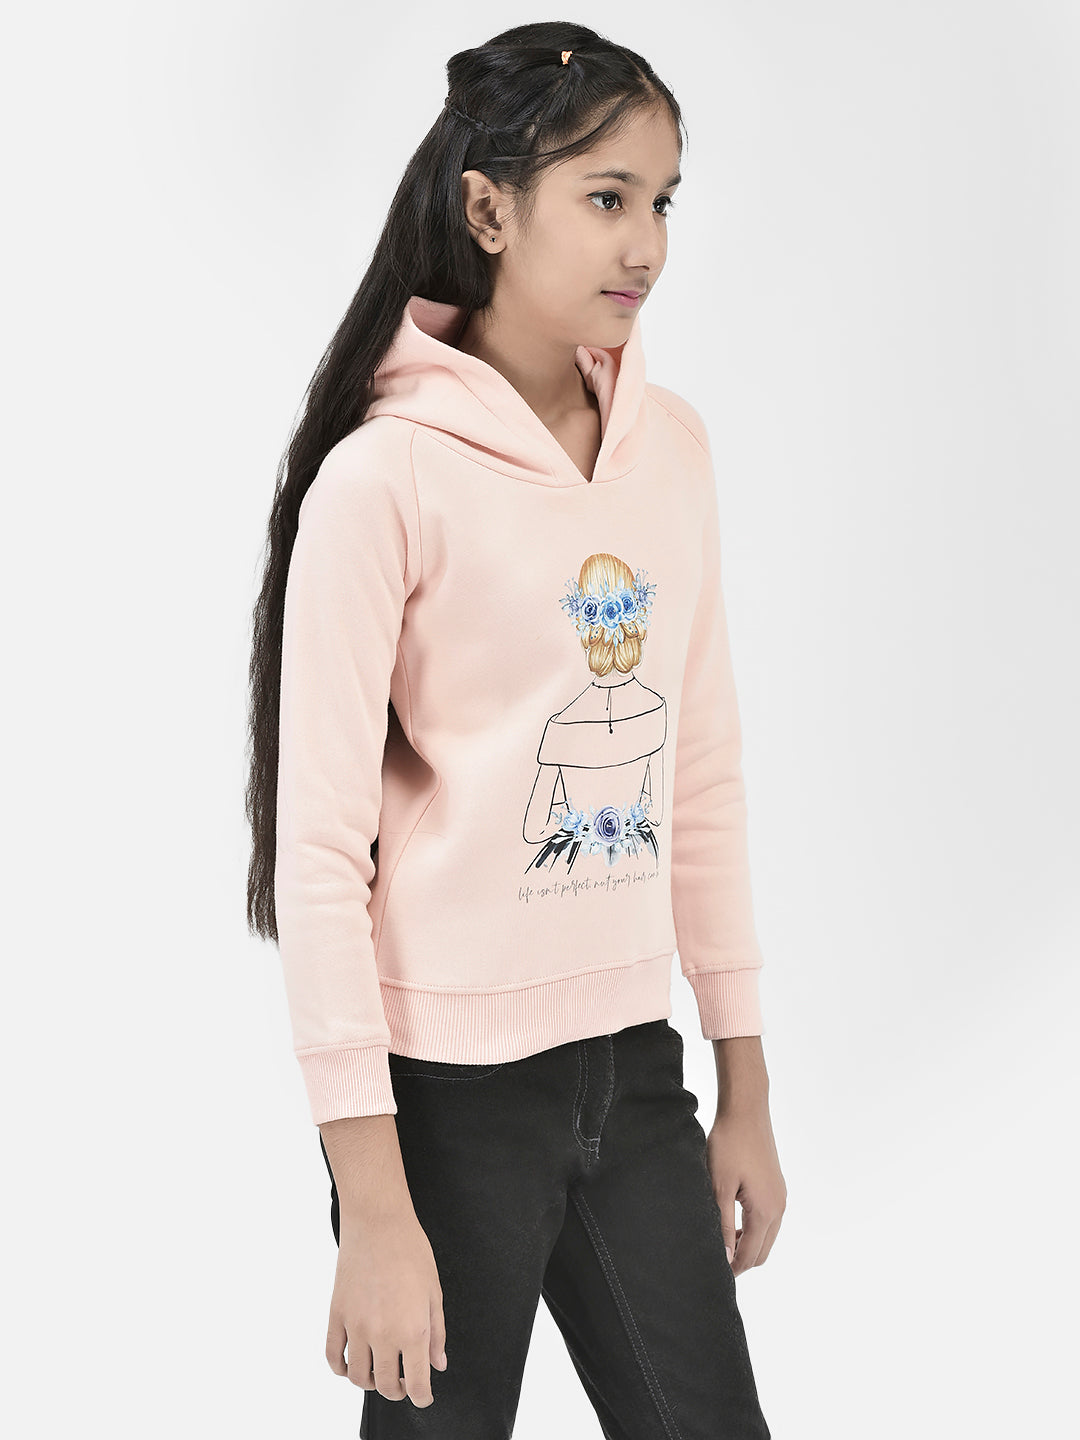 Peach Printed Sweatshirt With Hood-Girls Sweatshirts-Crimsoune Club